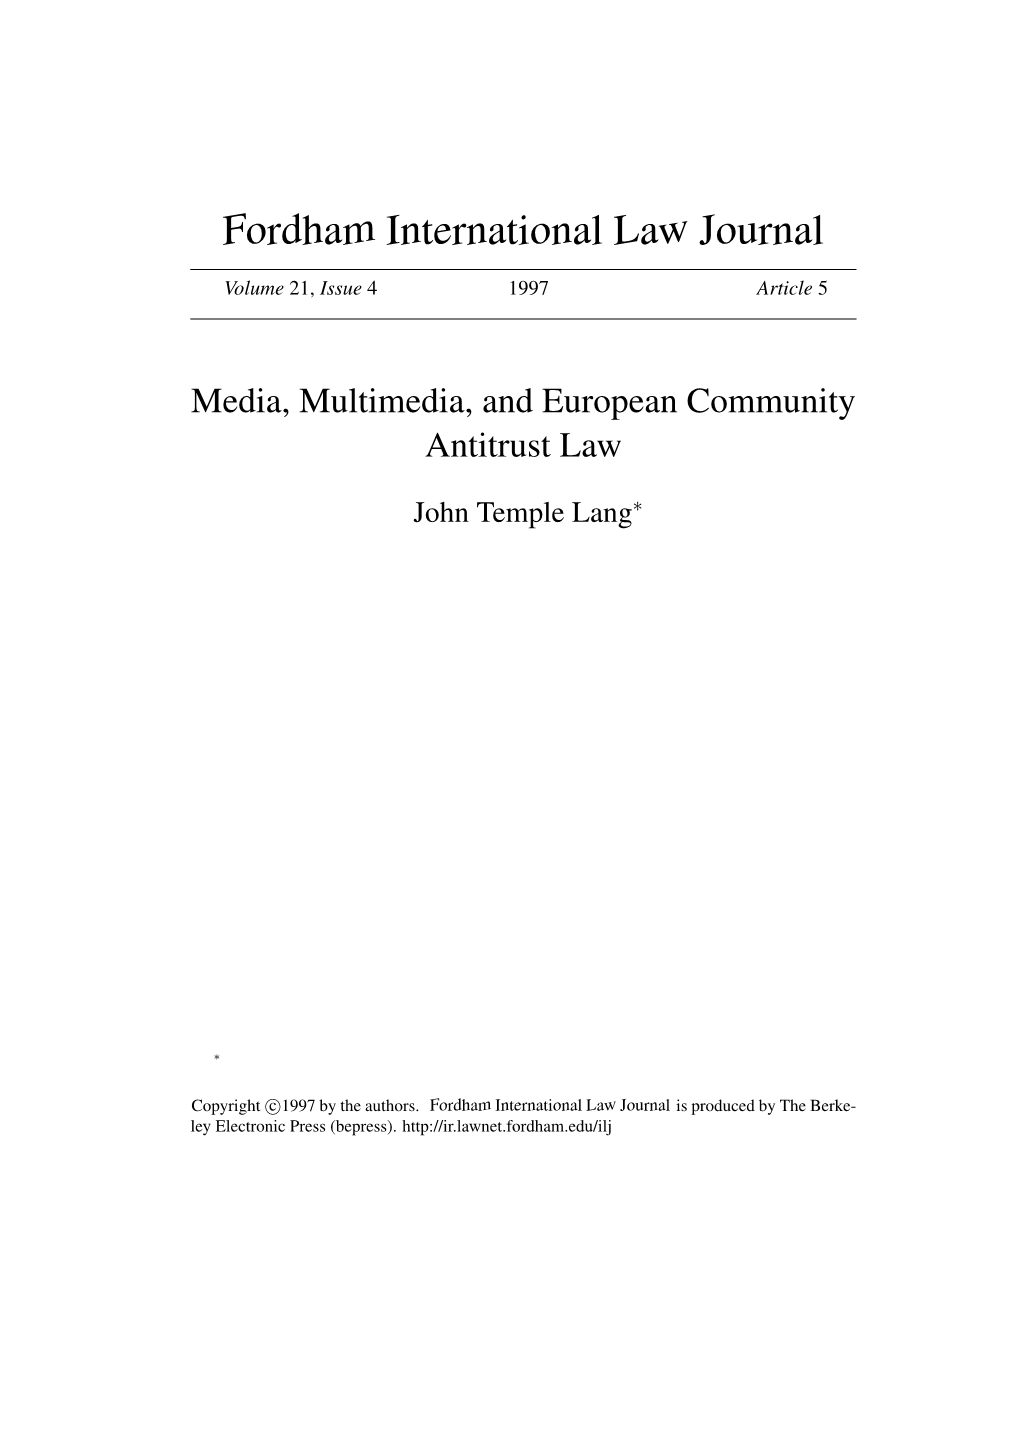 Media, Multimedia, and European Community Antitrust Law